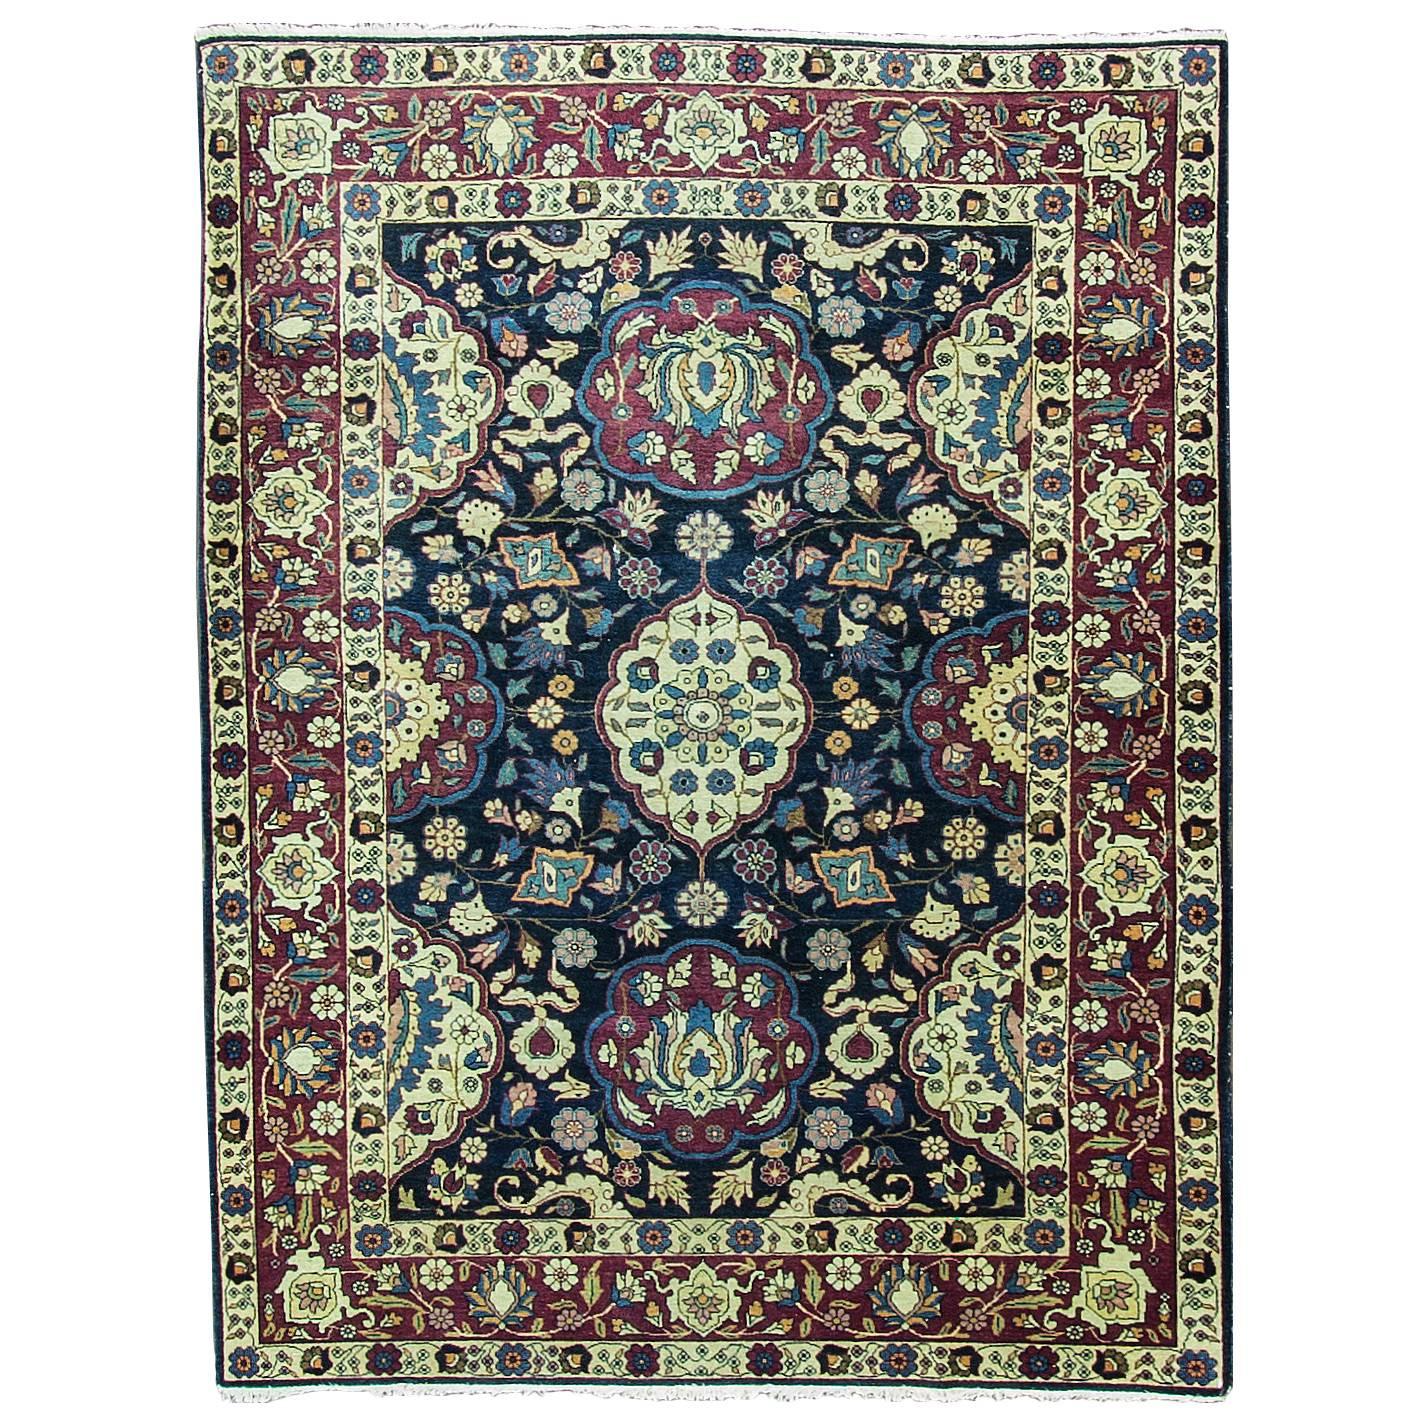 Antique Persian Tabriz Carpet, 4'6" x 6'